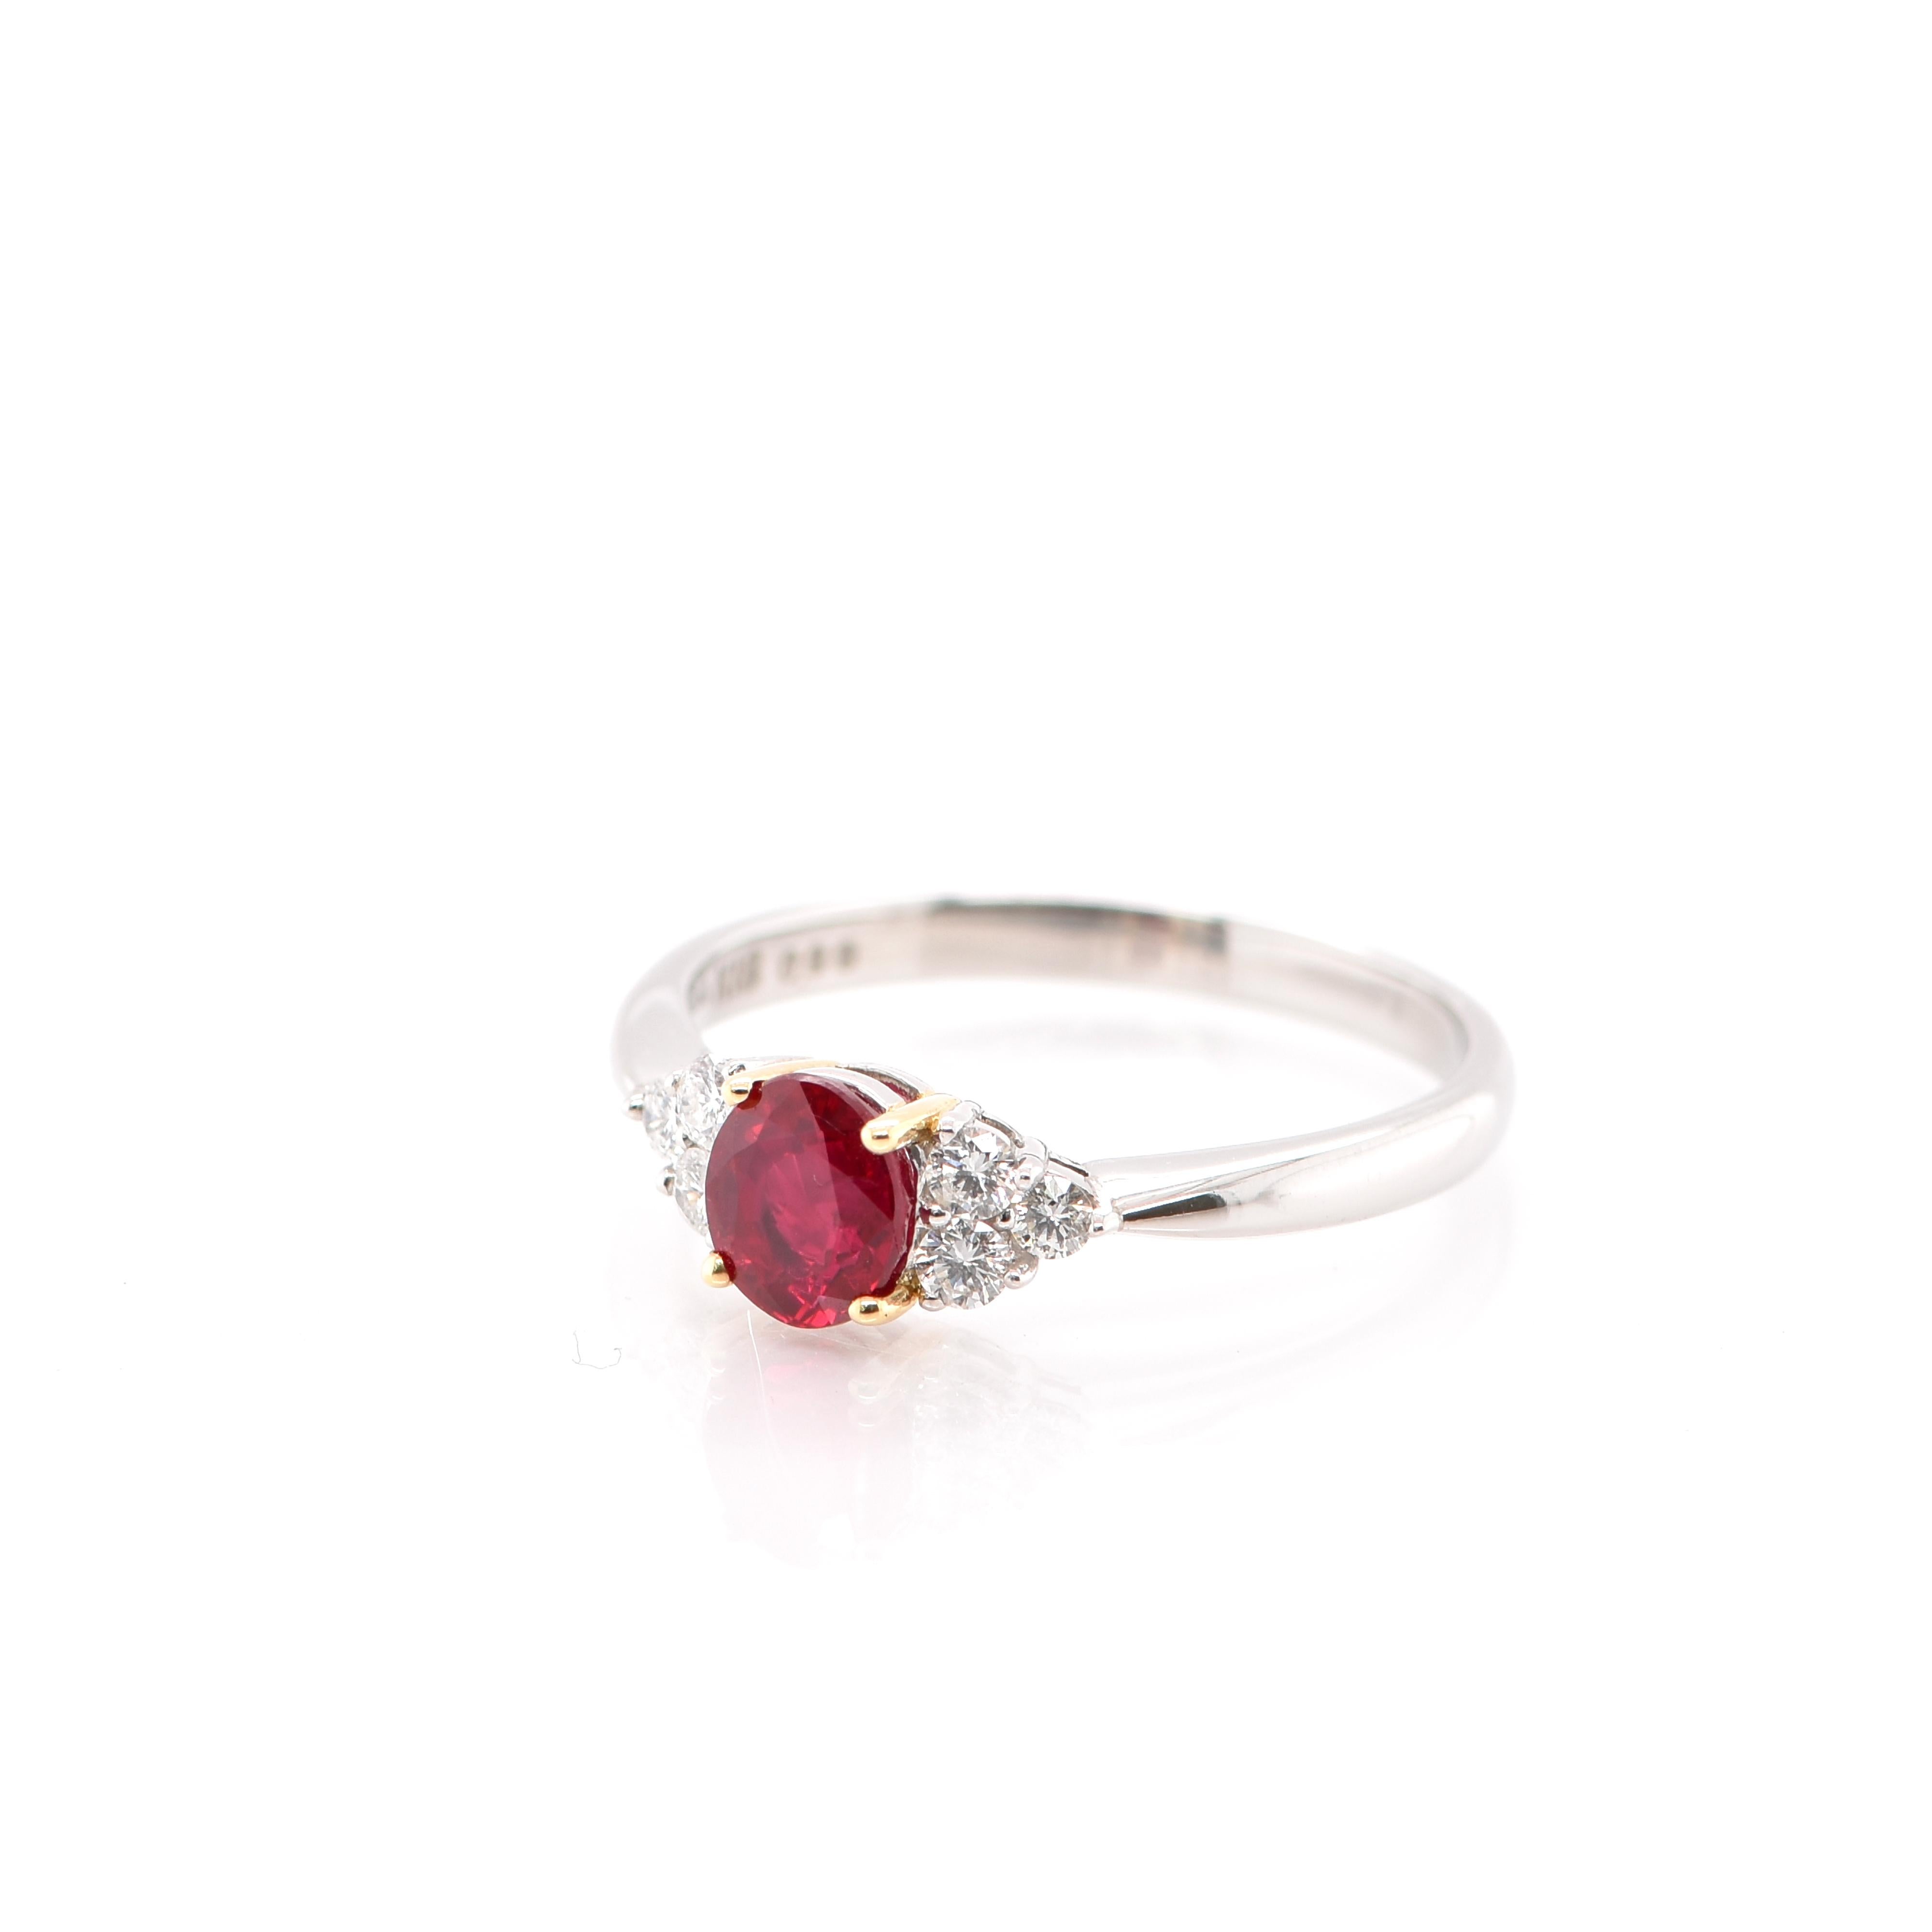 Modern 0.99 Carat Ruby and Diamond Engagement Ring Set in Platinum and 18 Karat Gold